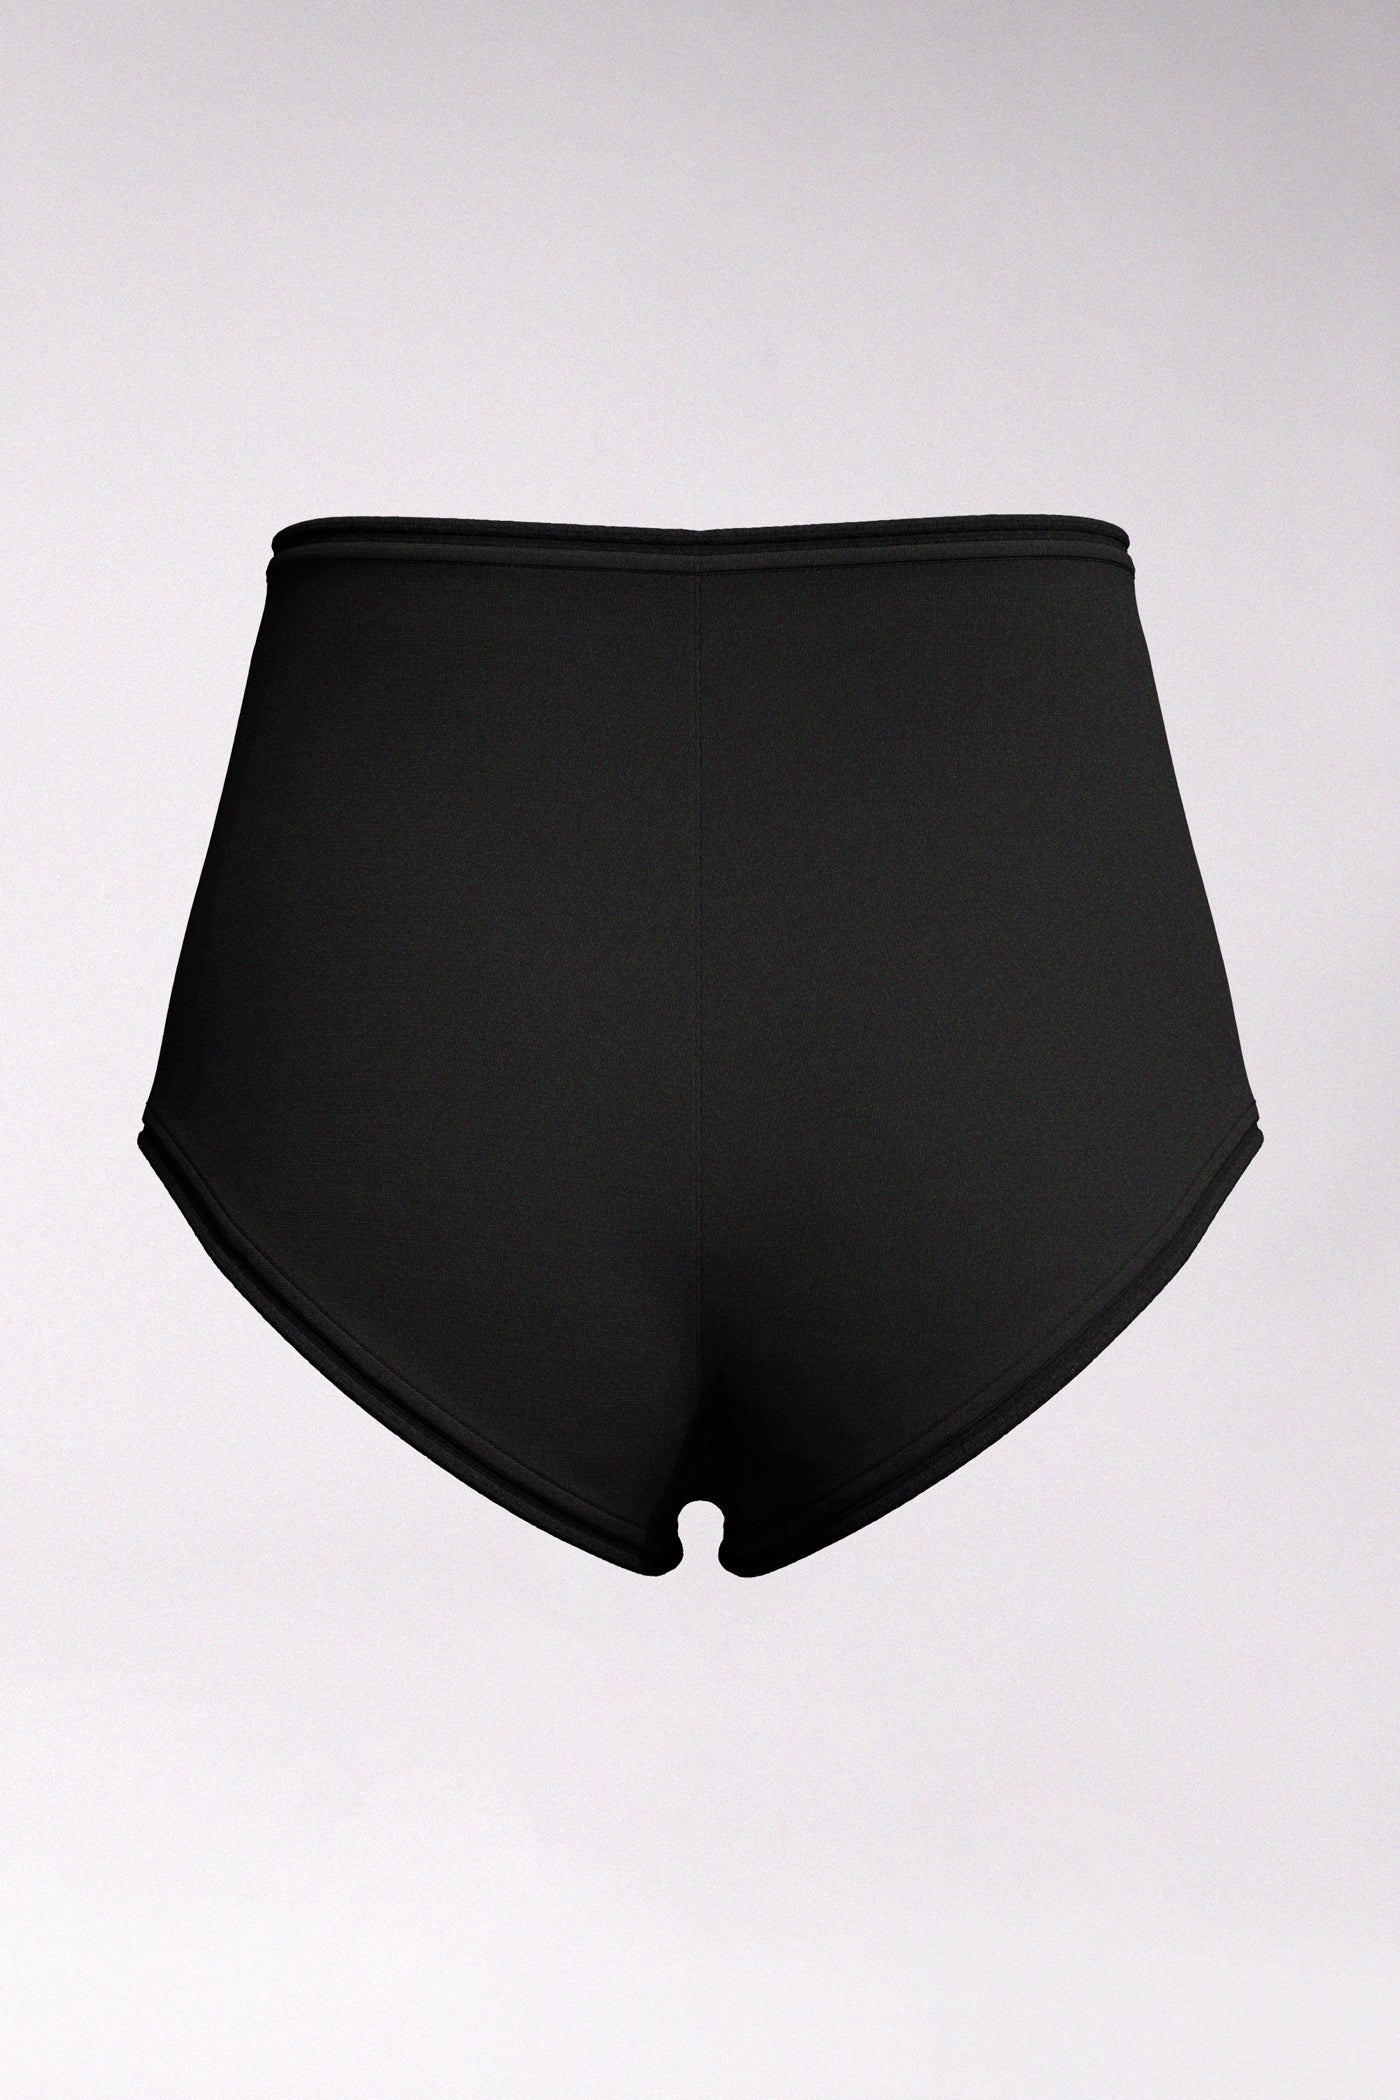 BODYZONE Women's Micro Shorts, Black, One Size